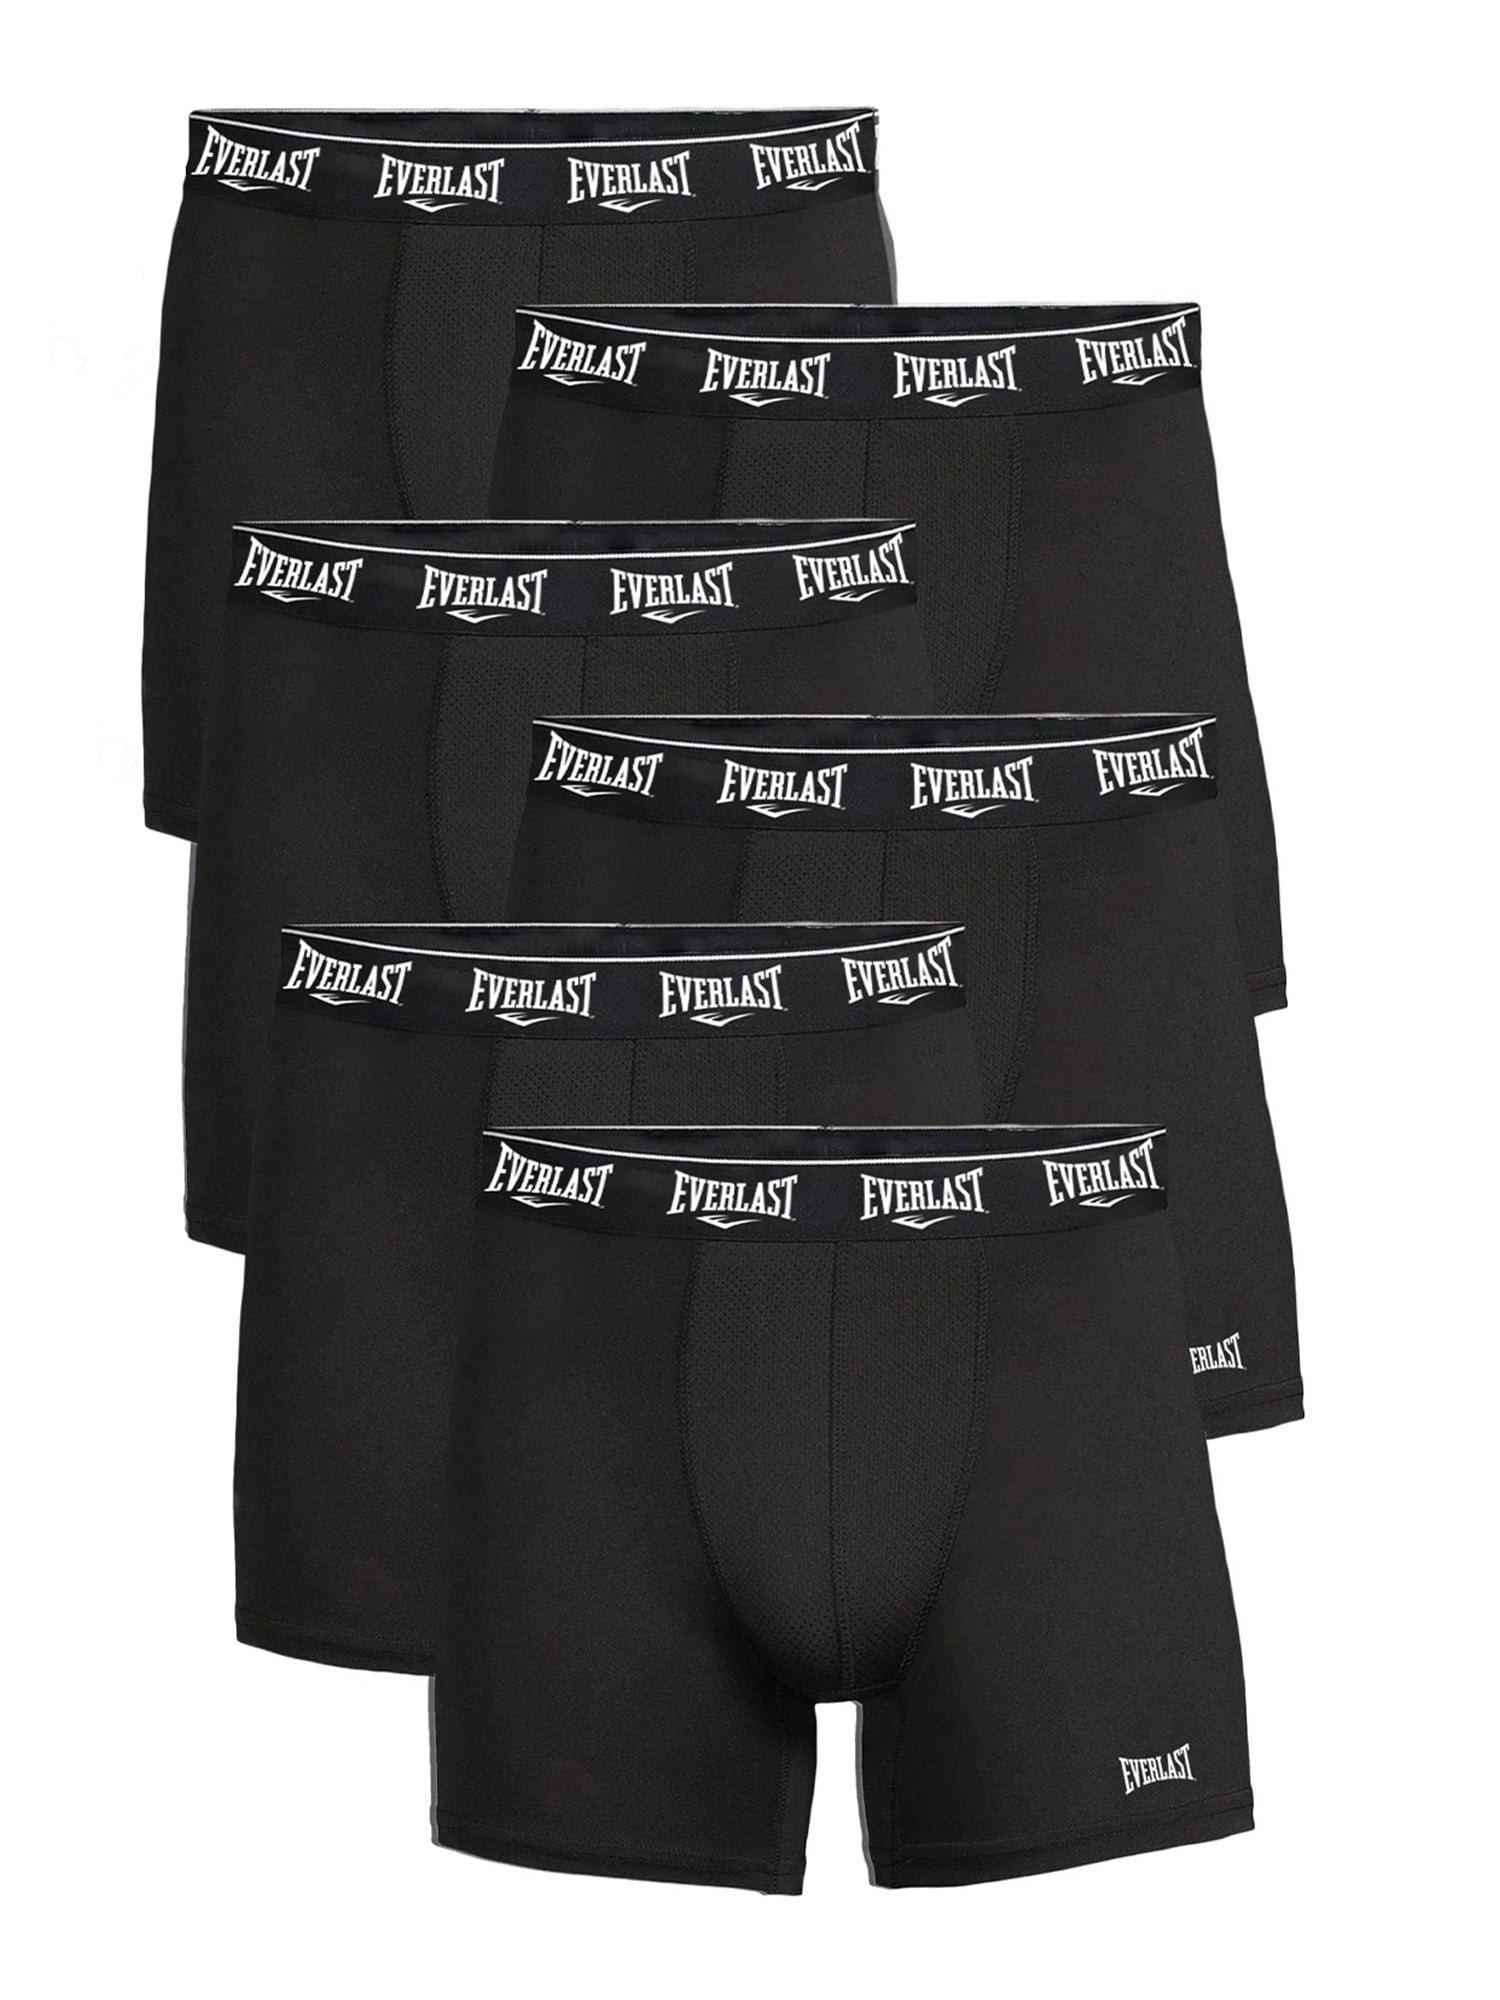 Gildan Mens Underwear Briefs, Multipack, Grey/Black (6-Pack), Large